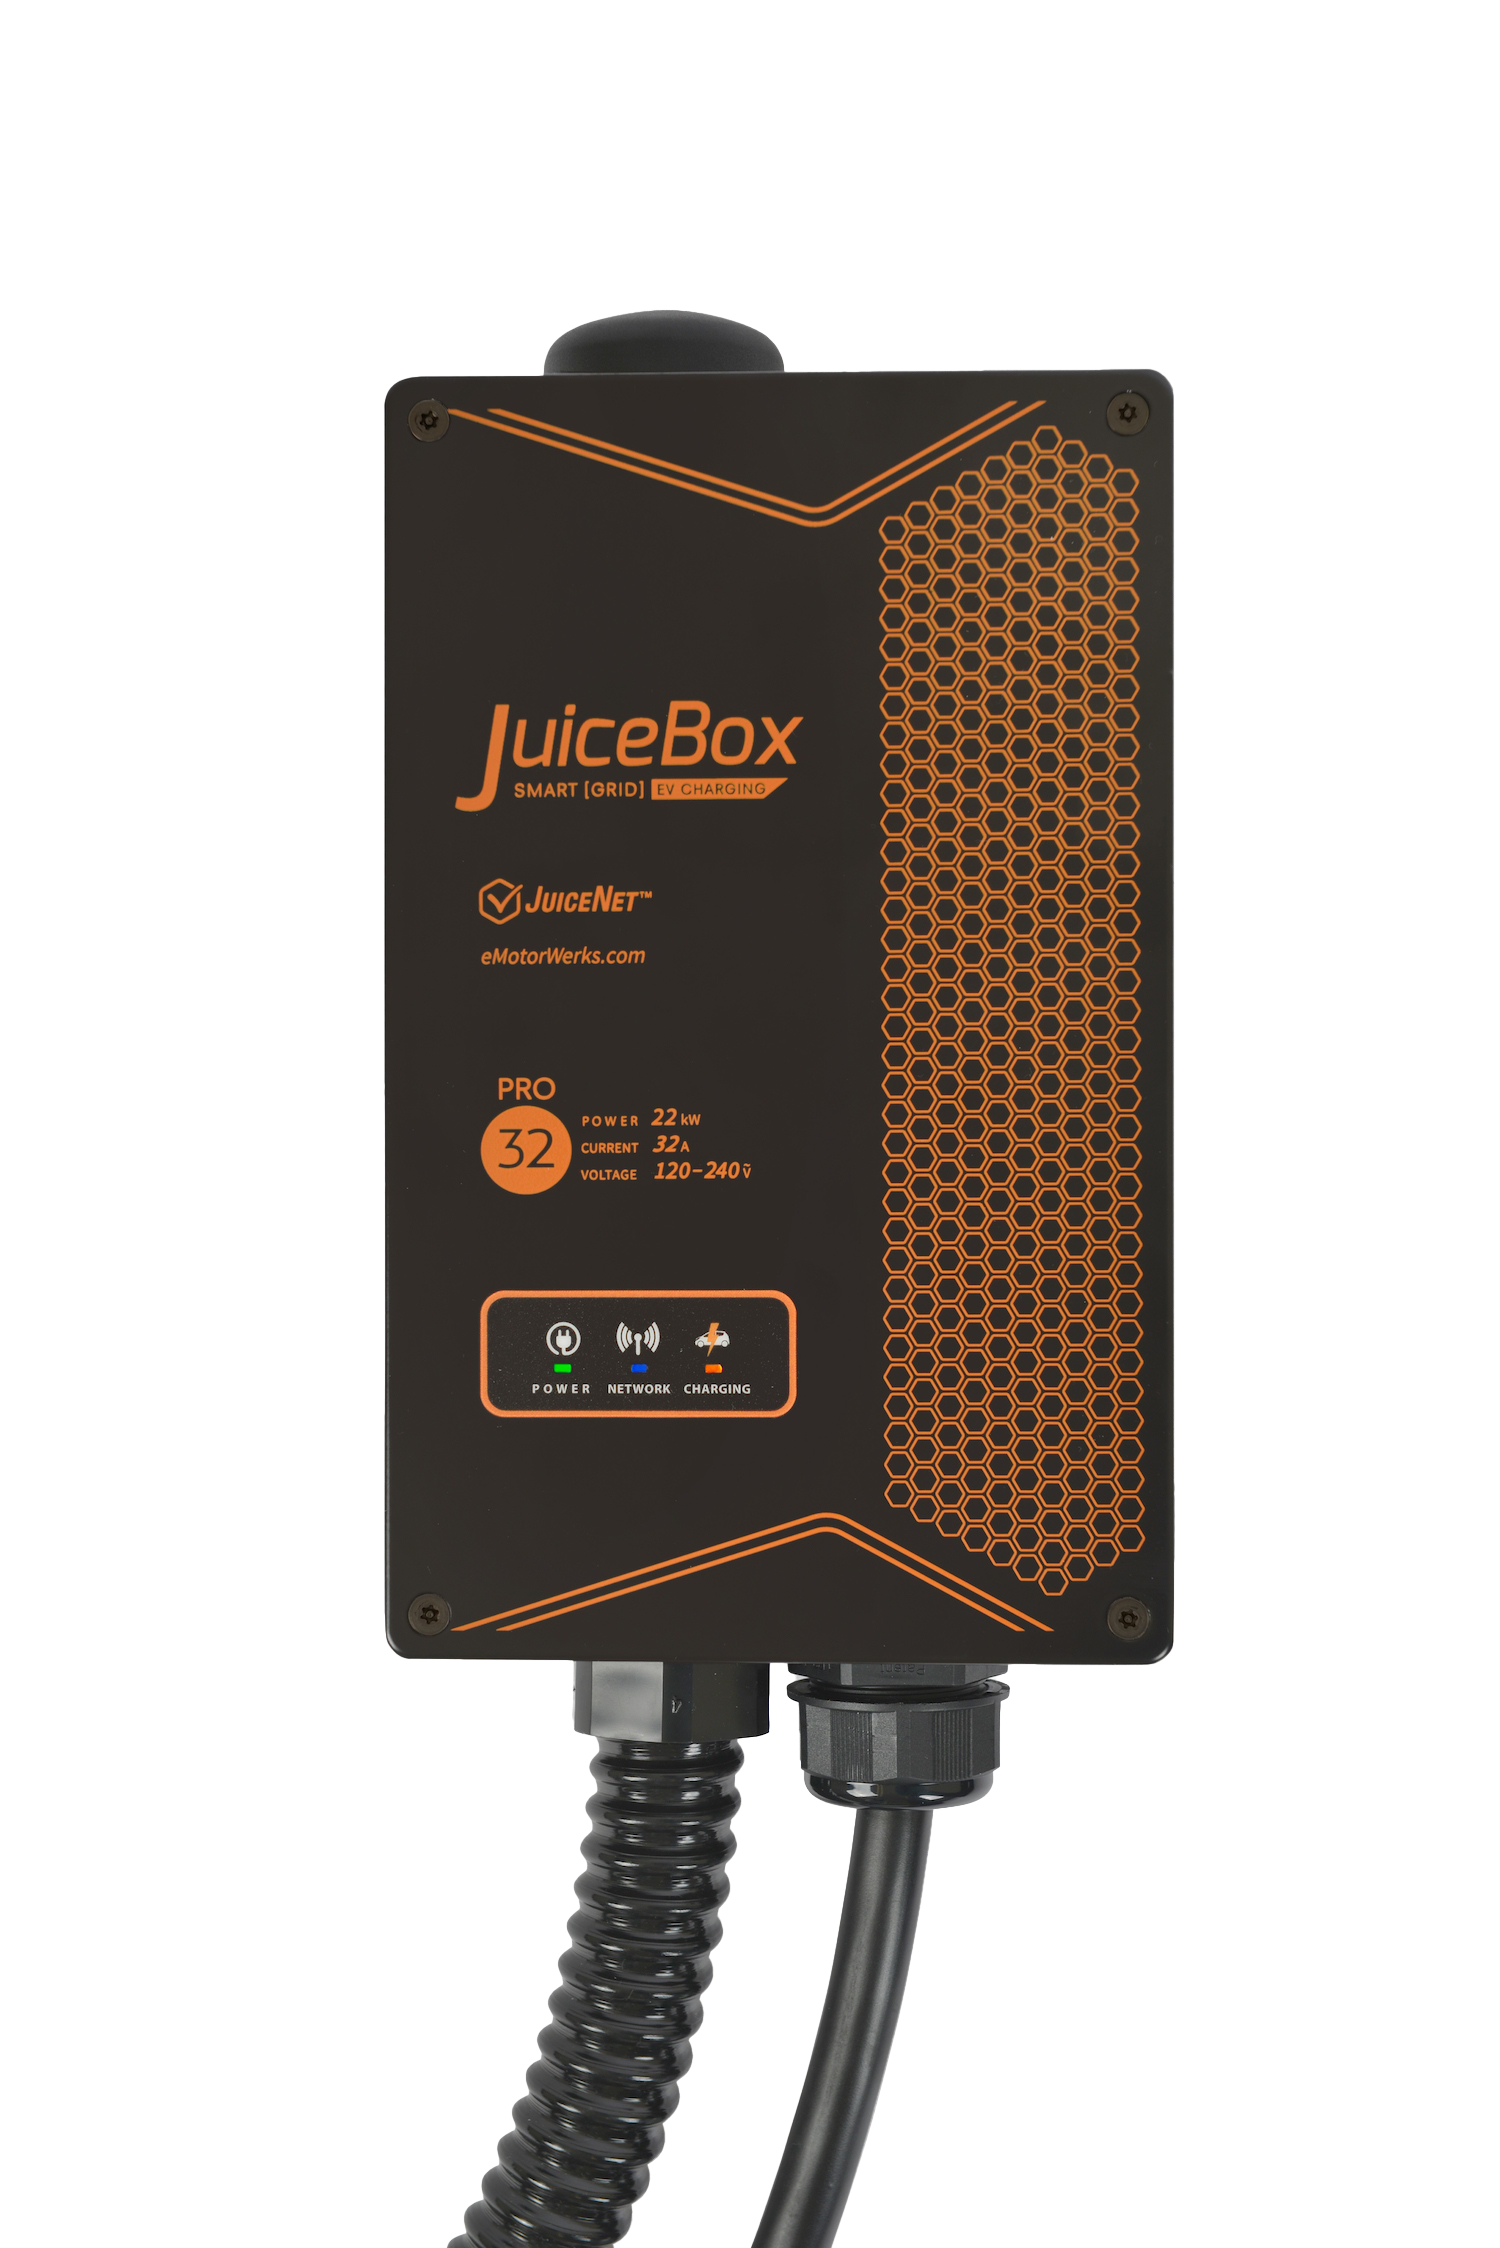 Juice box pro